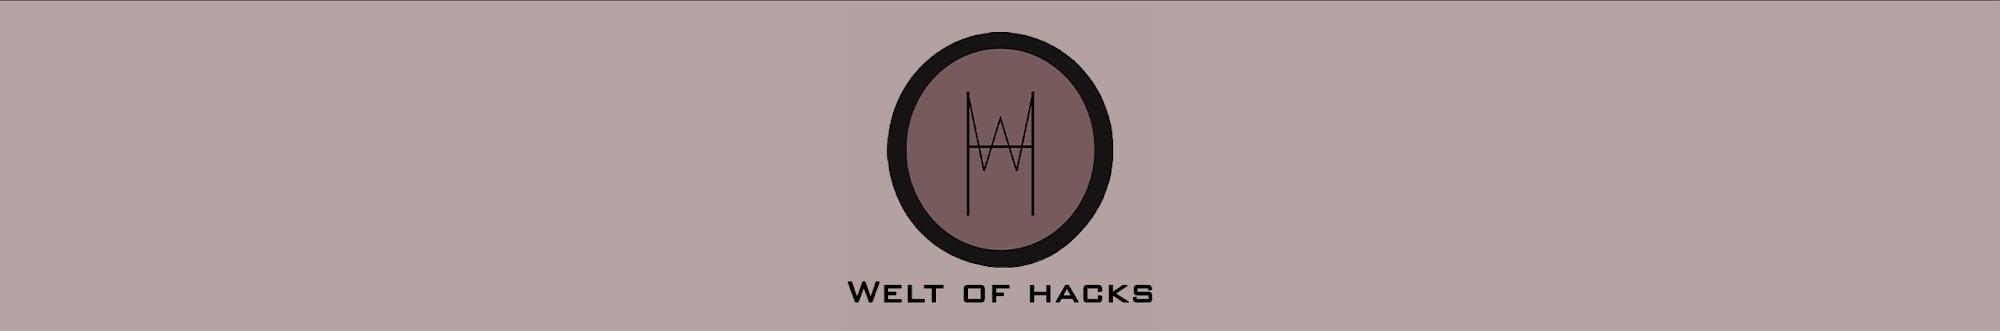 Welt of hacks